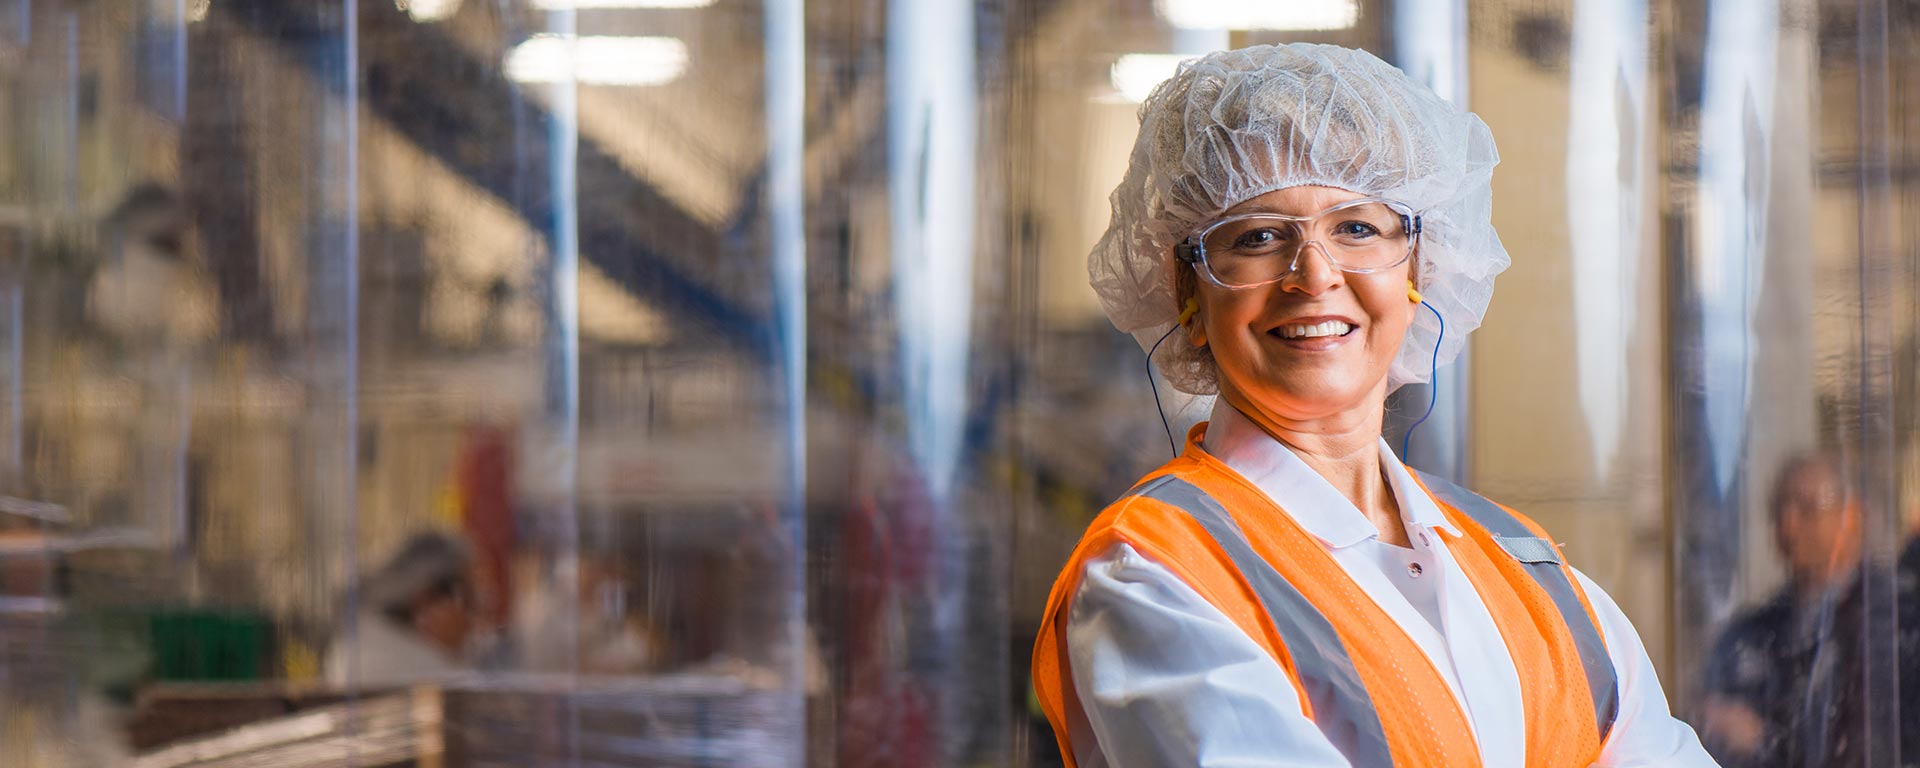 Smiling employee wearing a hair net